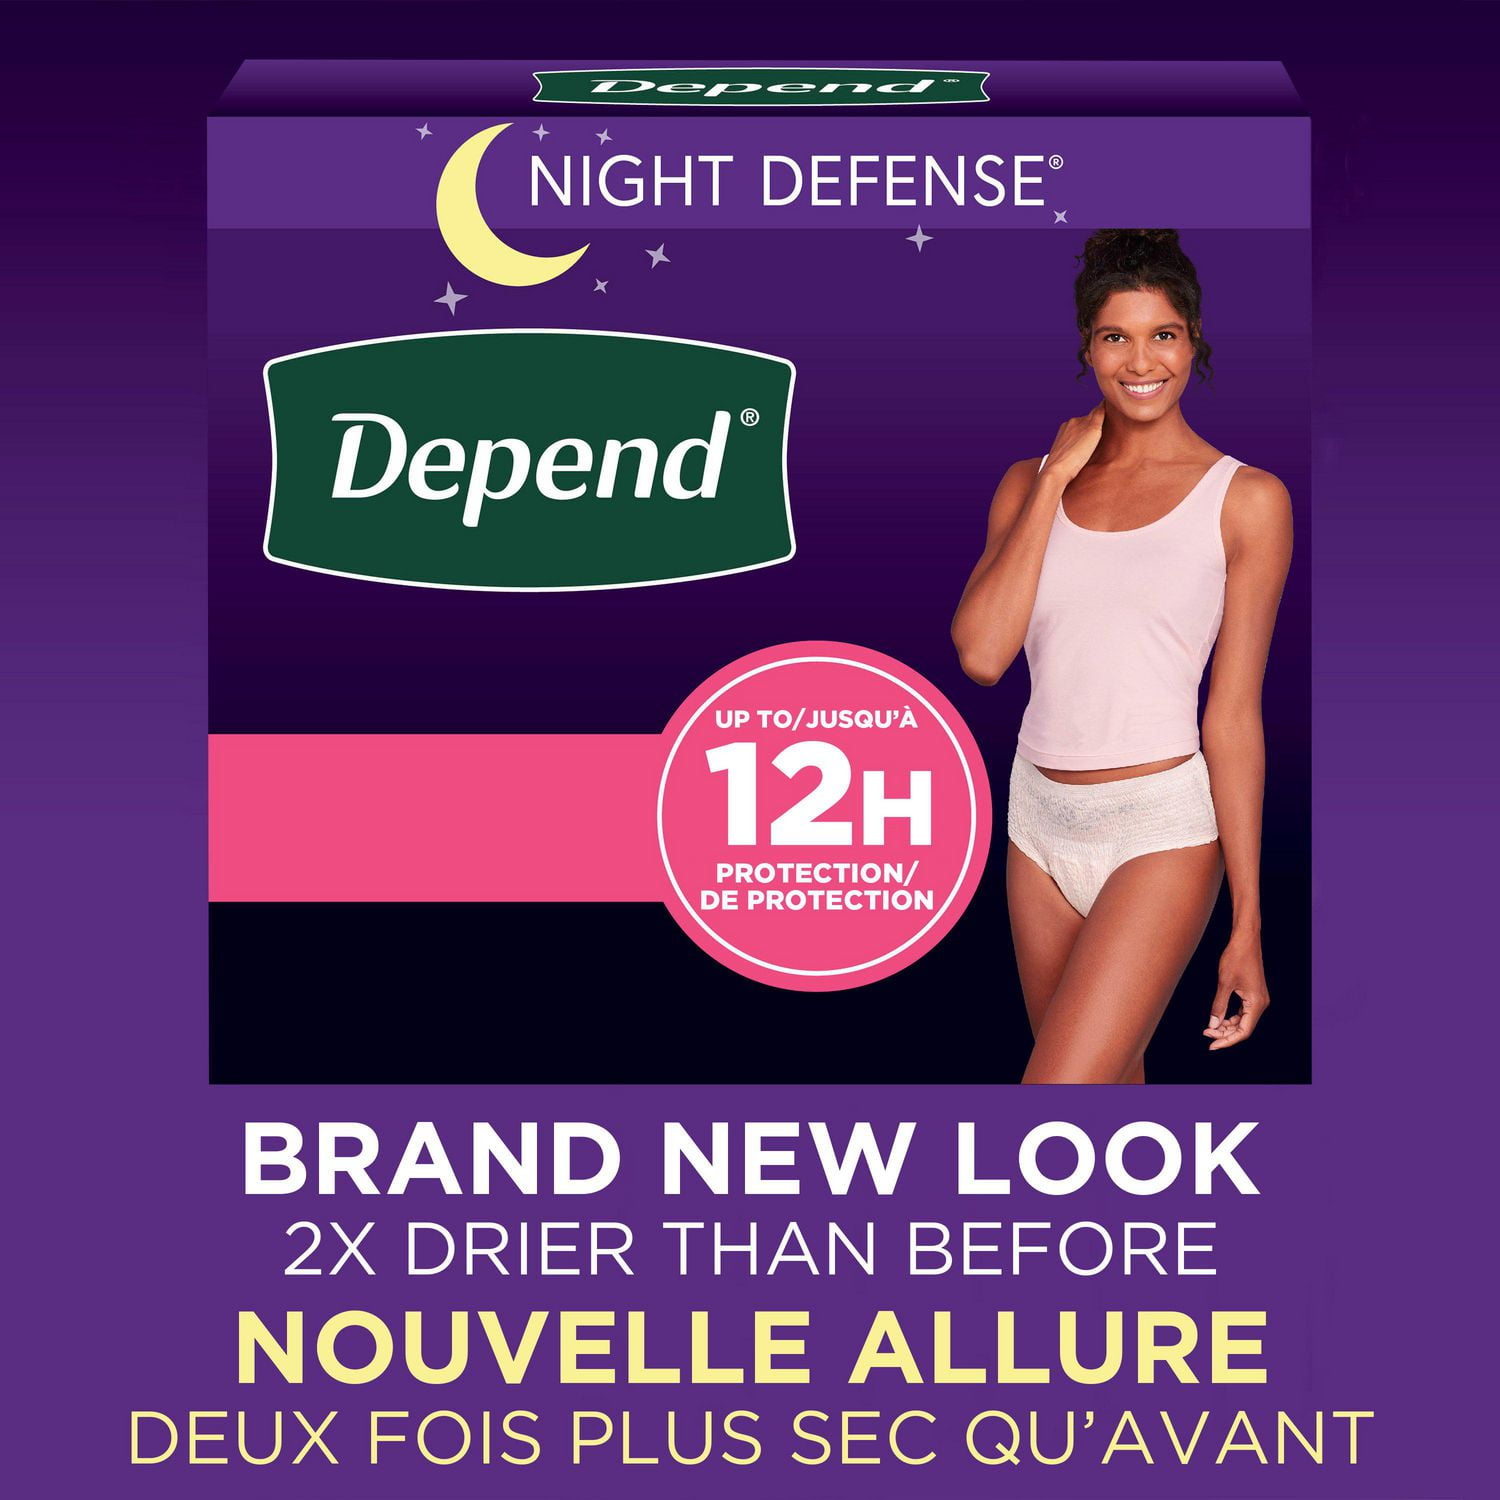 Depend Underwear, Night Defense, M 15 Ea, Health & Personal Care